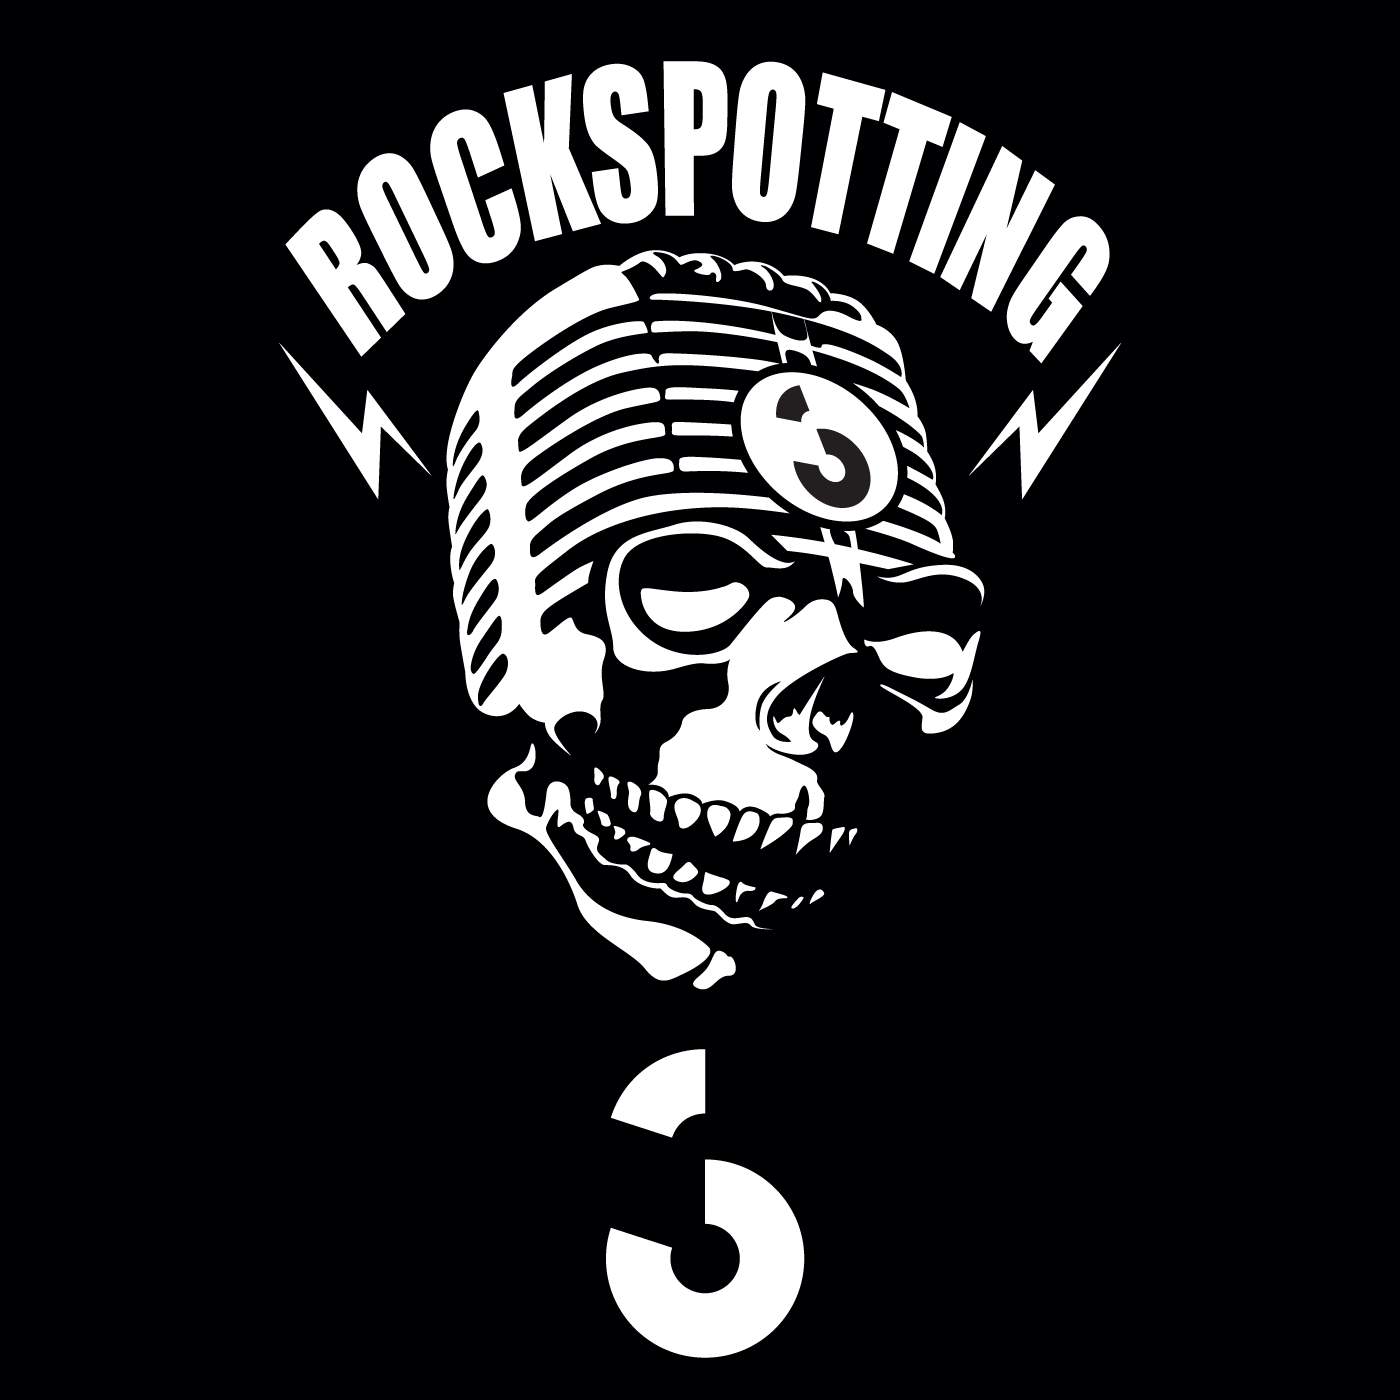 Rockspotting - RTS